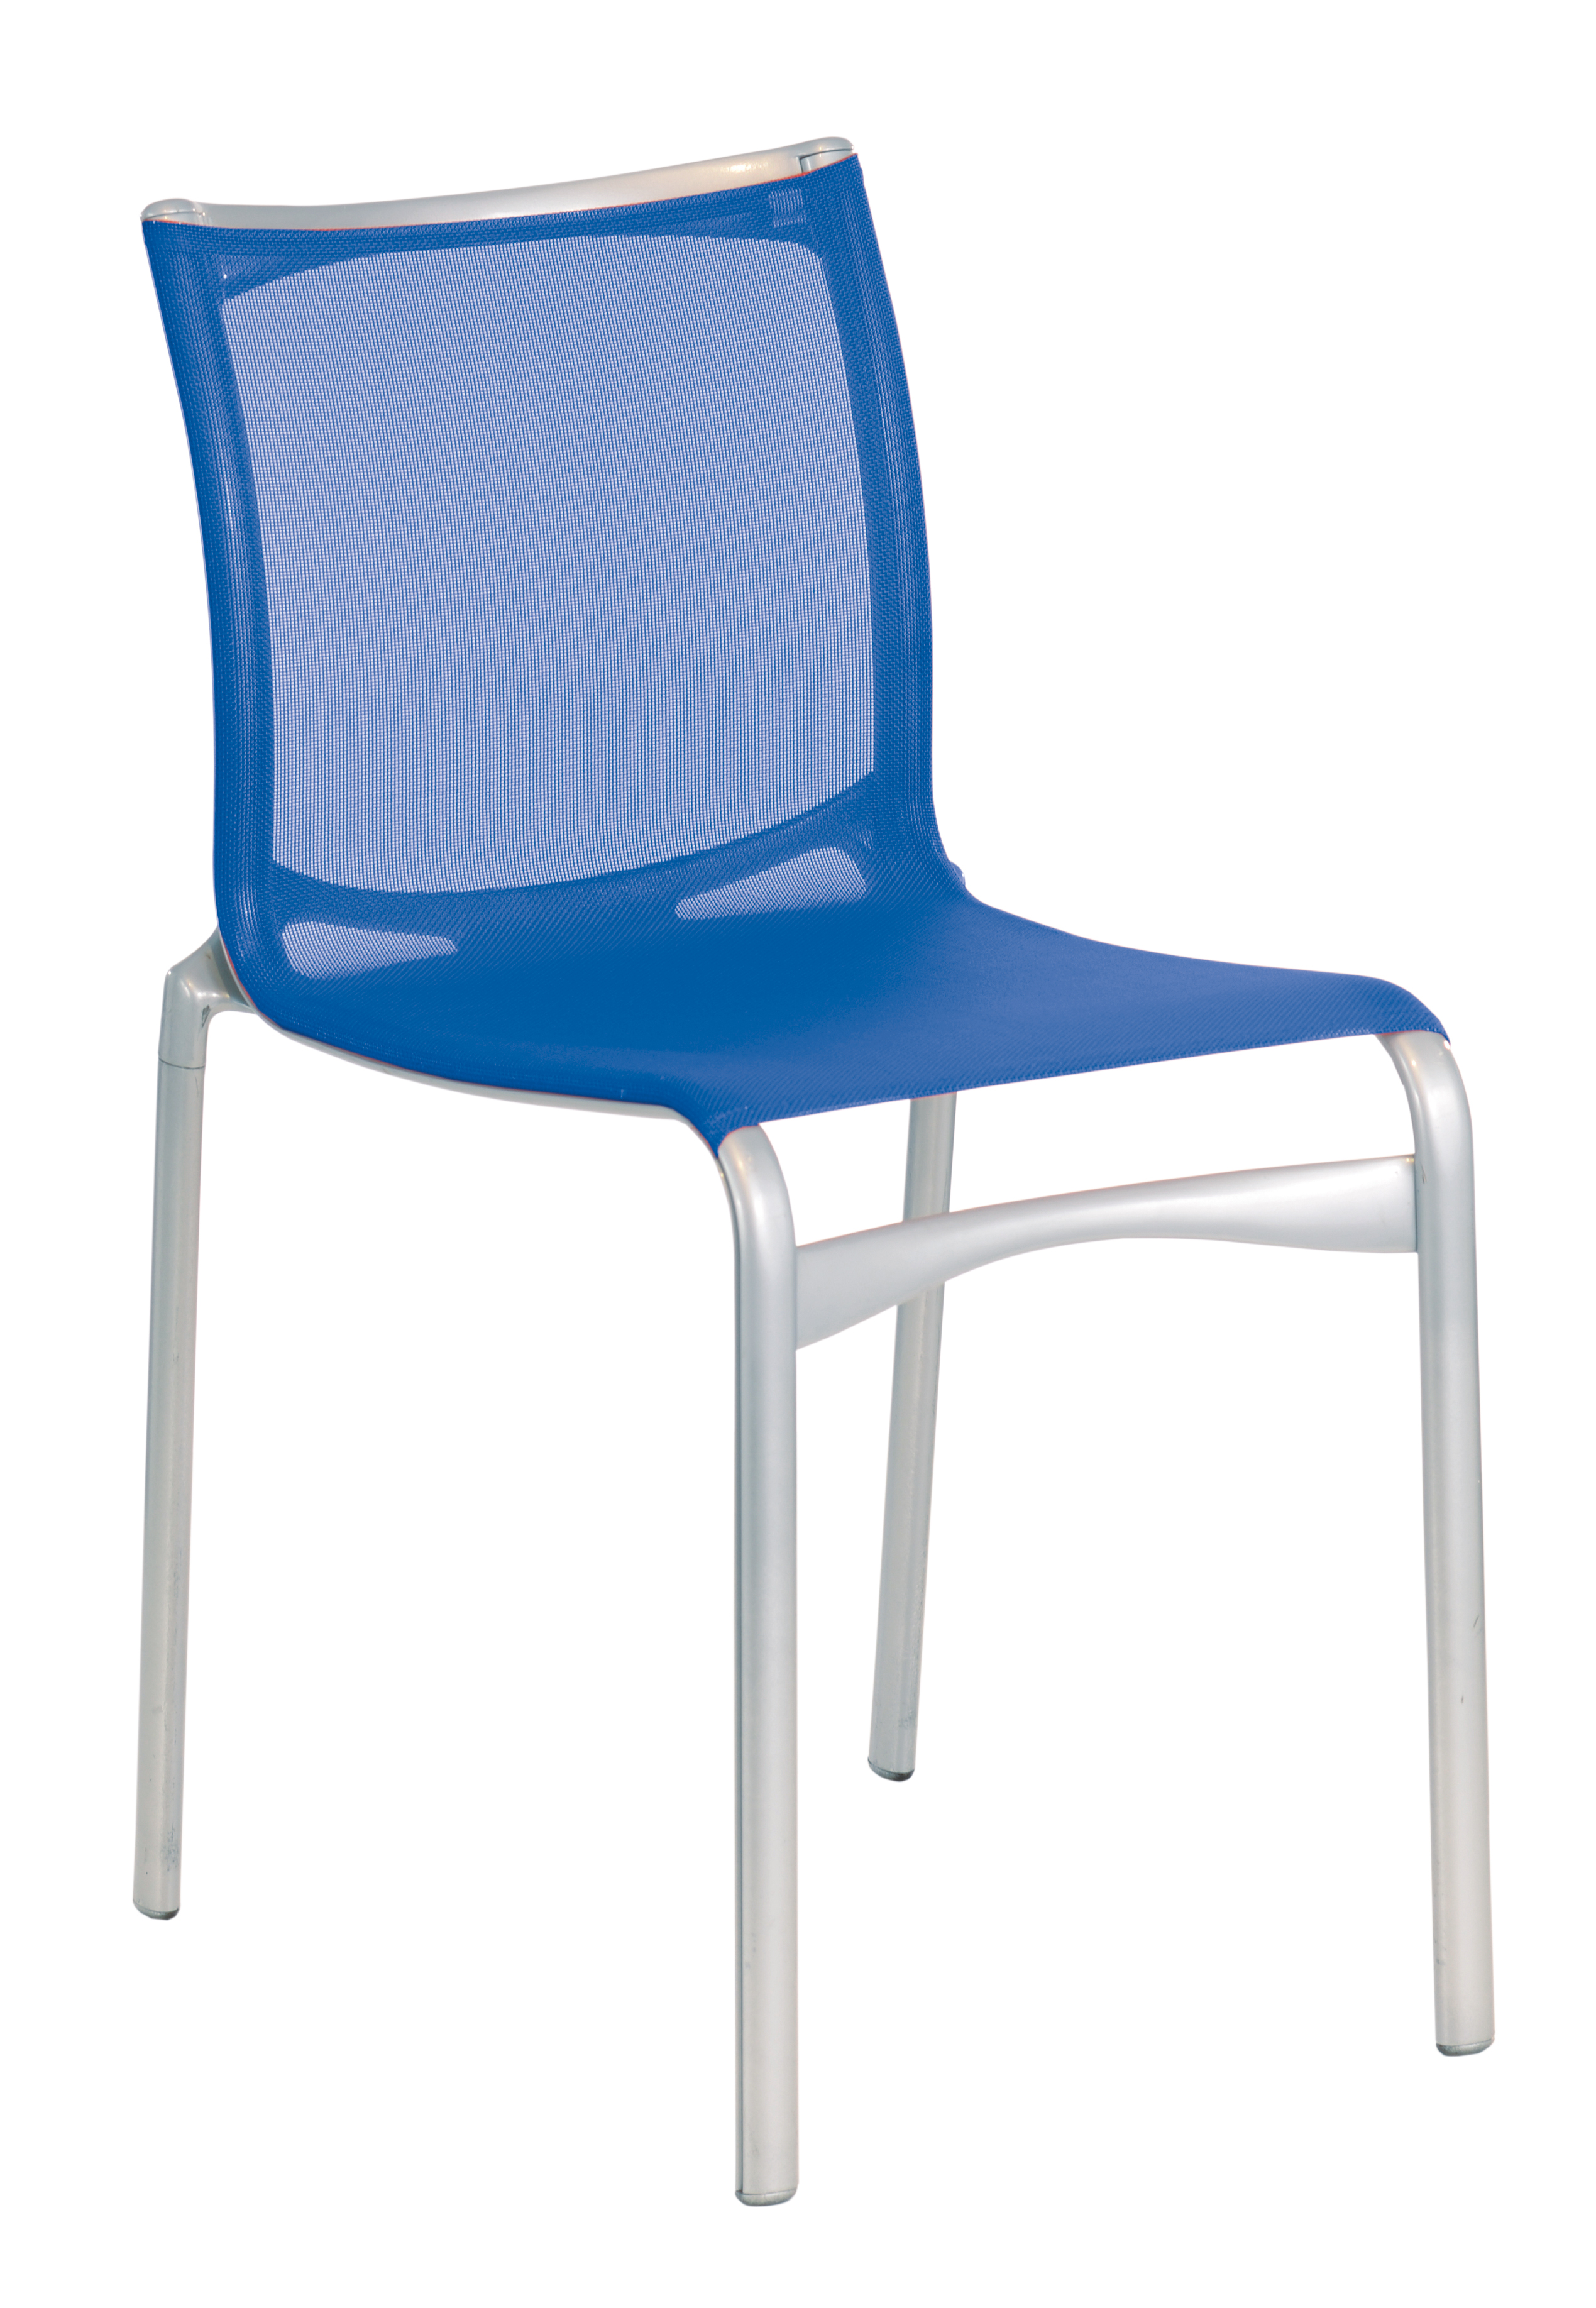 Design-Stuhl Highframe 40/416 (Indoor, Outdoor, Alias - Netzstuhl, stapelbar) - MEGA-reduziert!